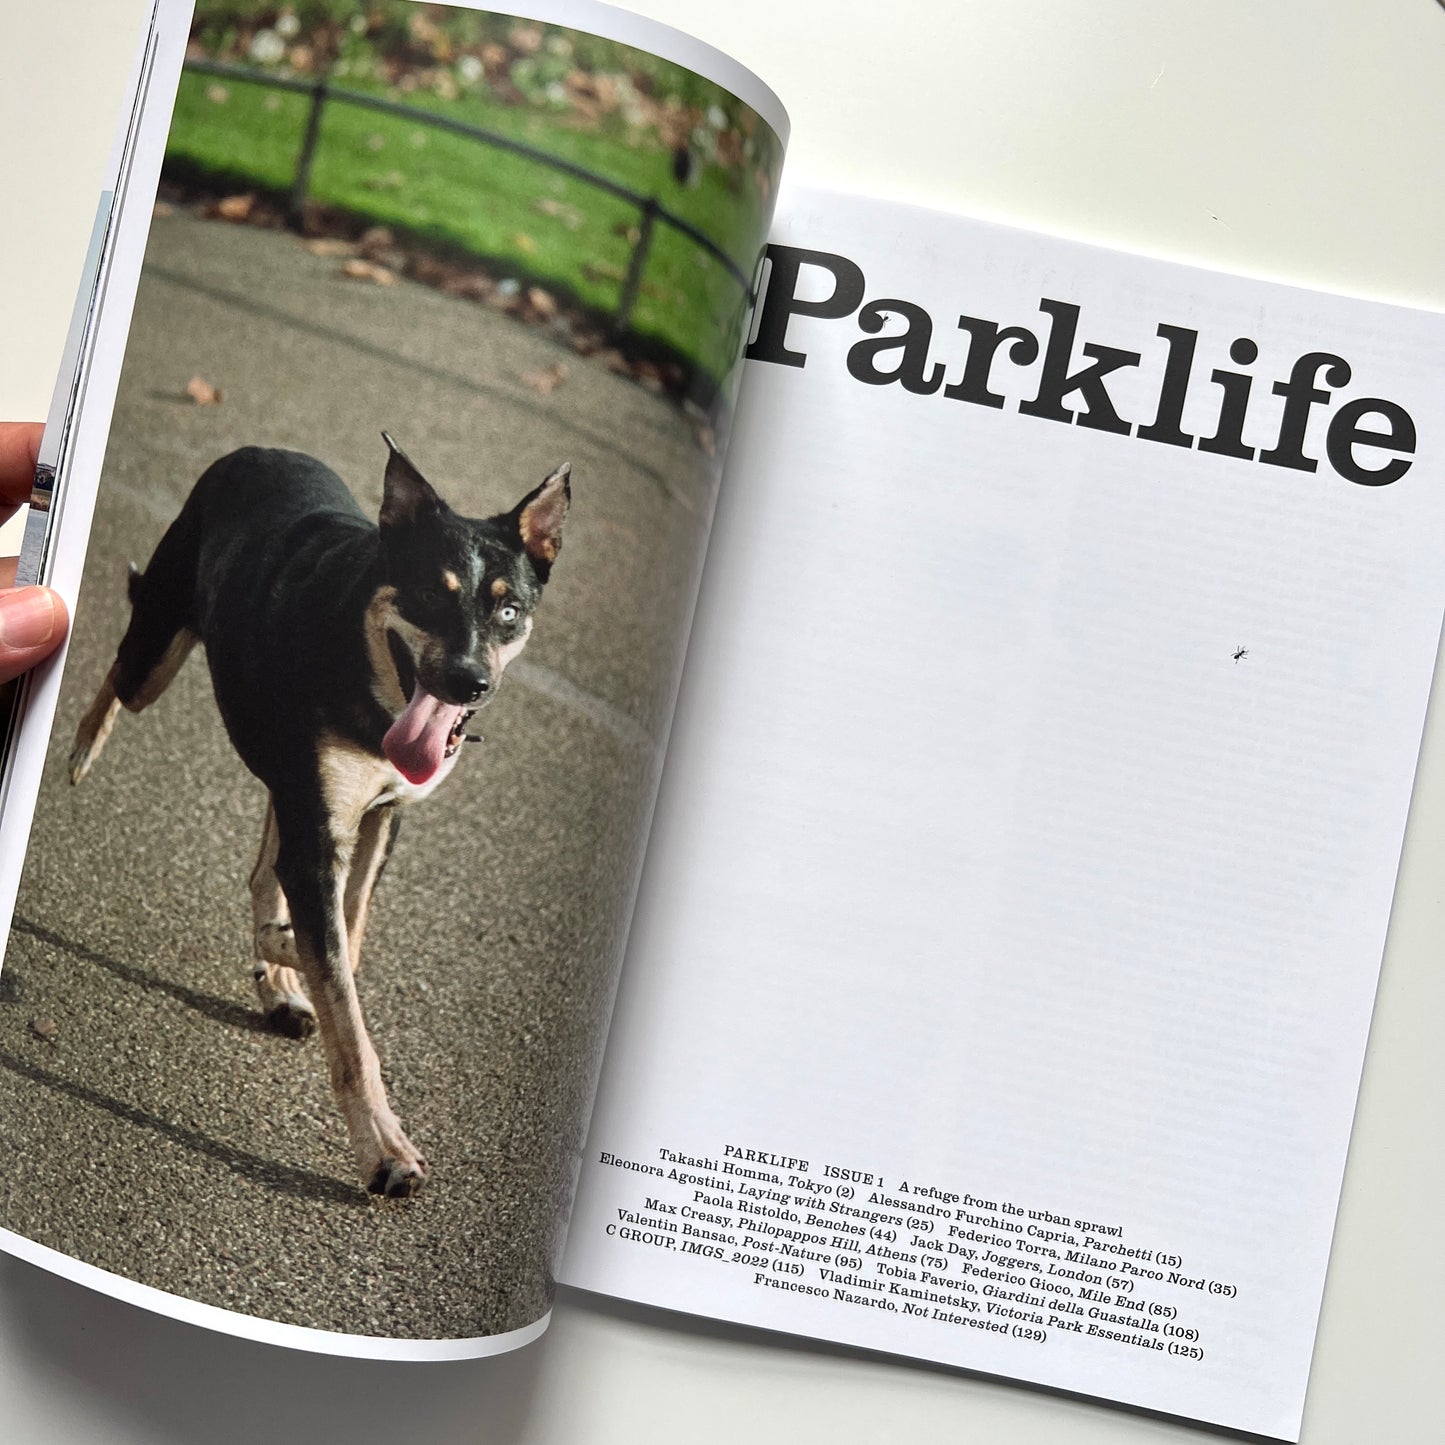 Parklife, Issue 1